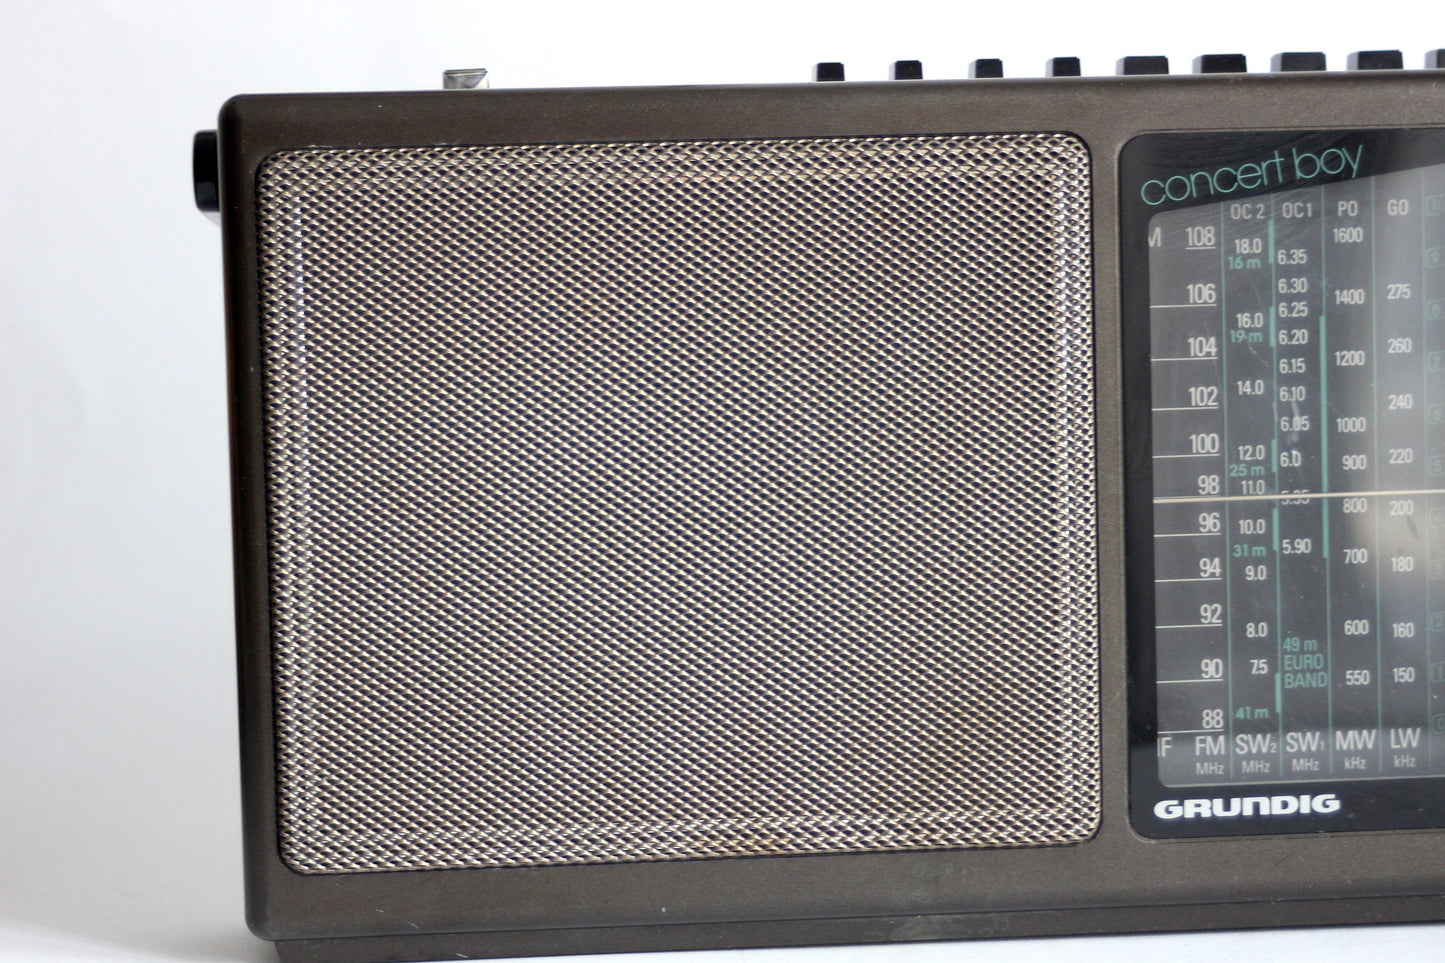 GRUNDIG Concert Boy 225 Portable Radio fm/sw/mw/lw. Broadcast receiver. Germany 1987